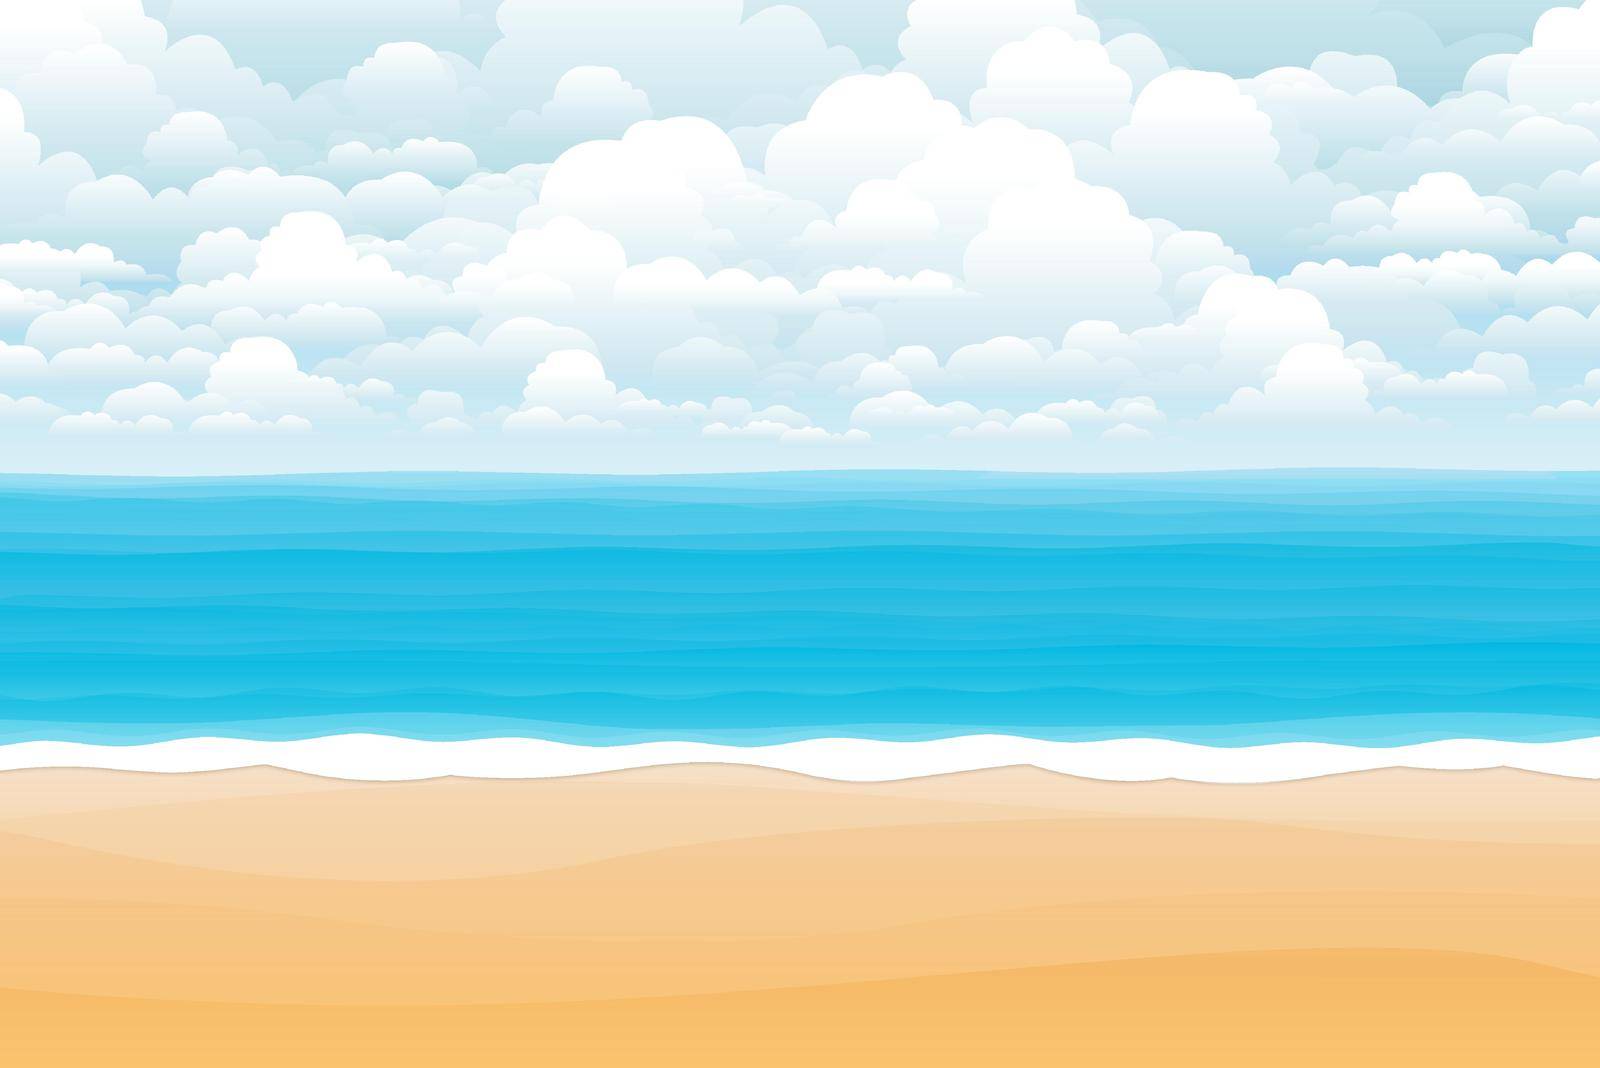 Tropical seascape,Illustration Summer beach on cloudy days.